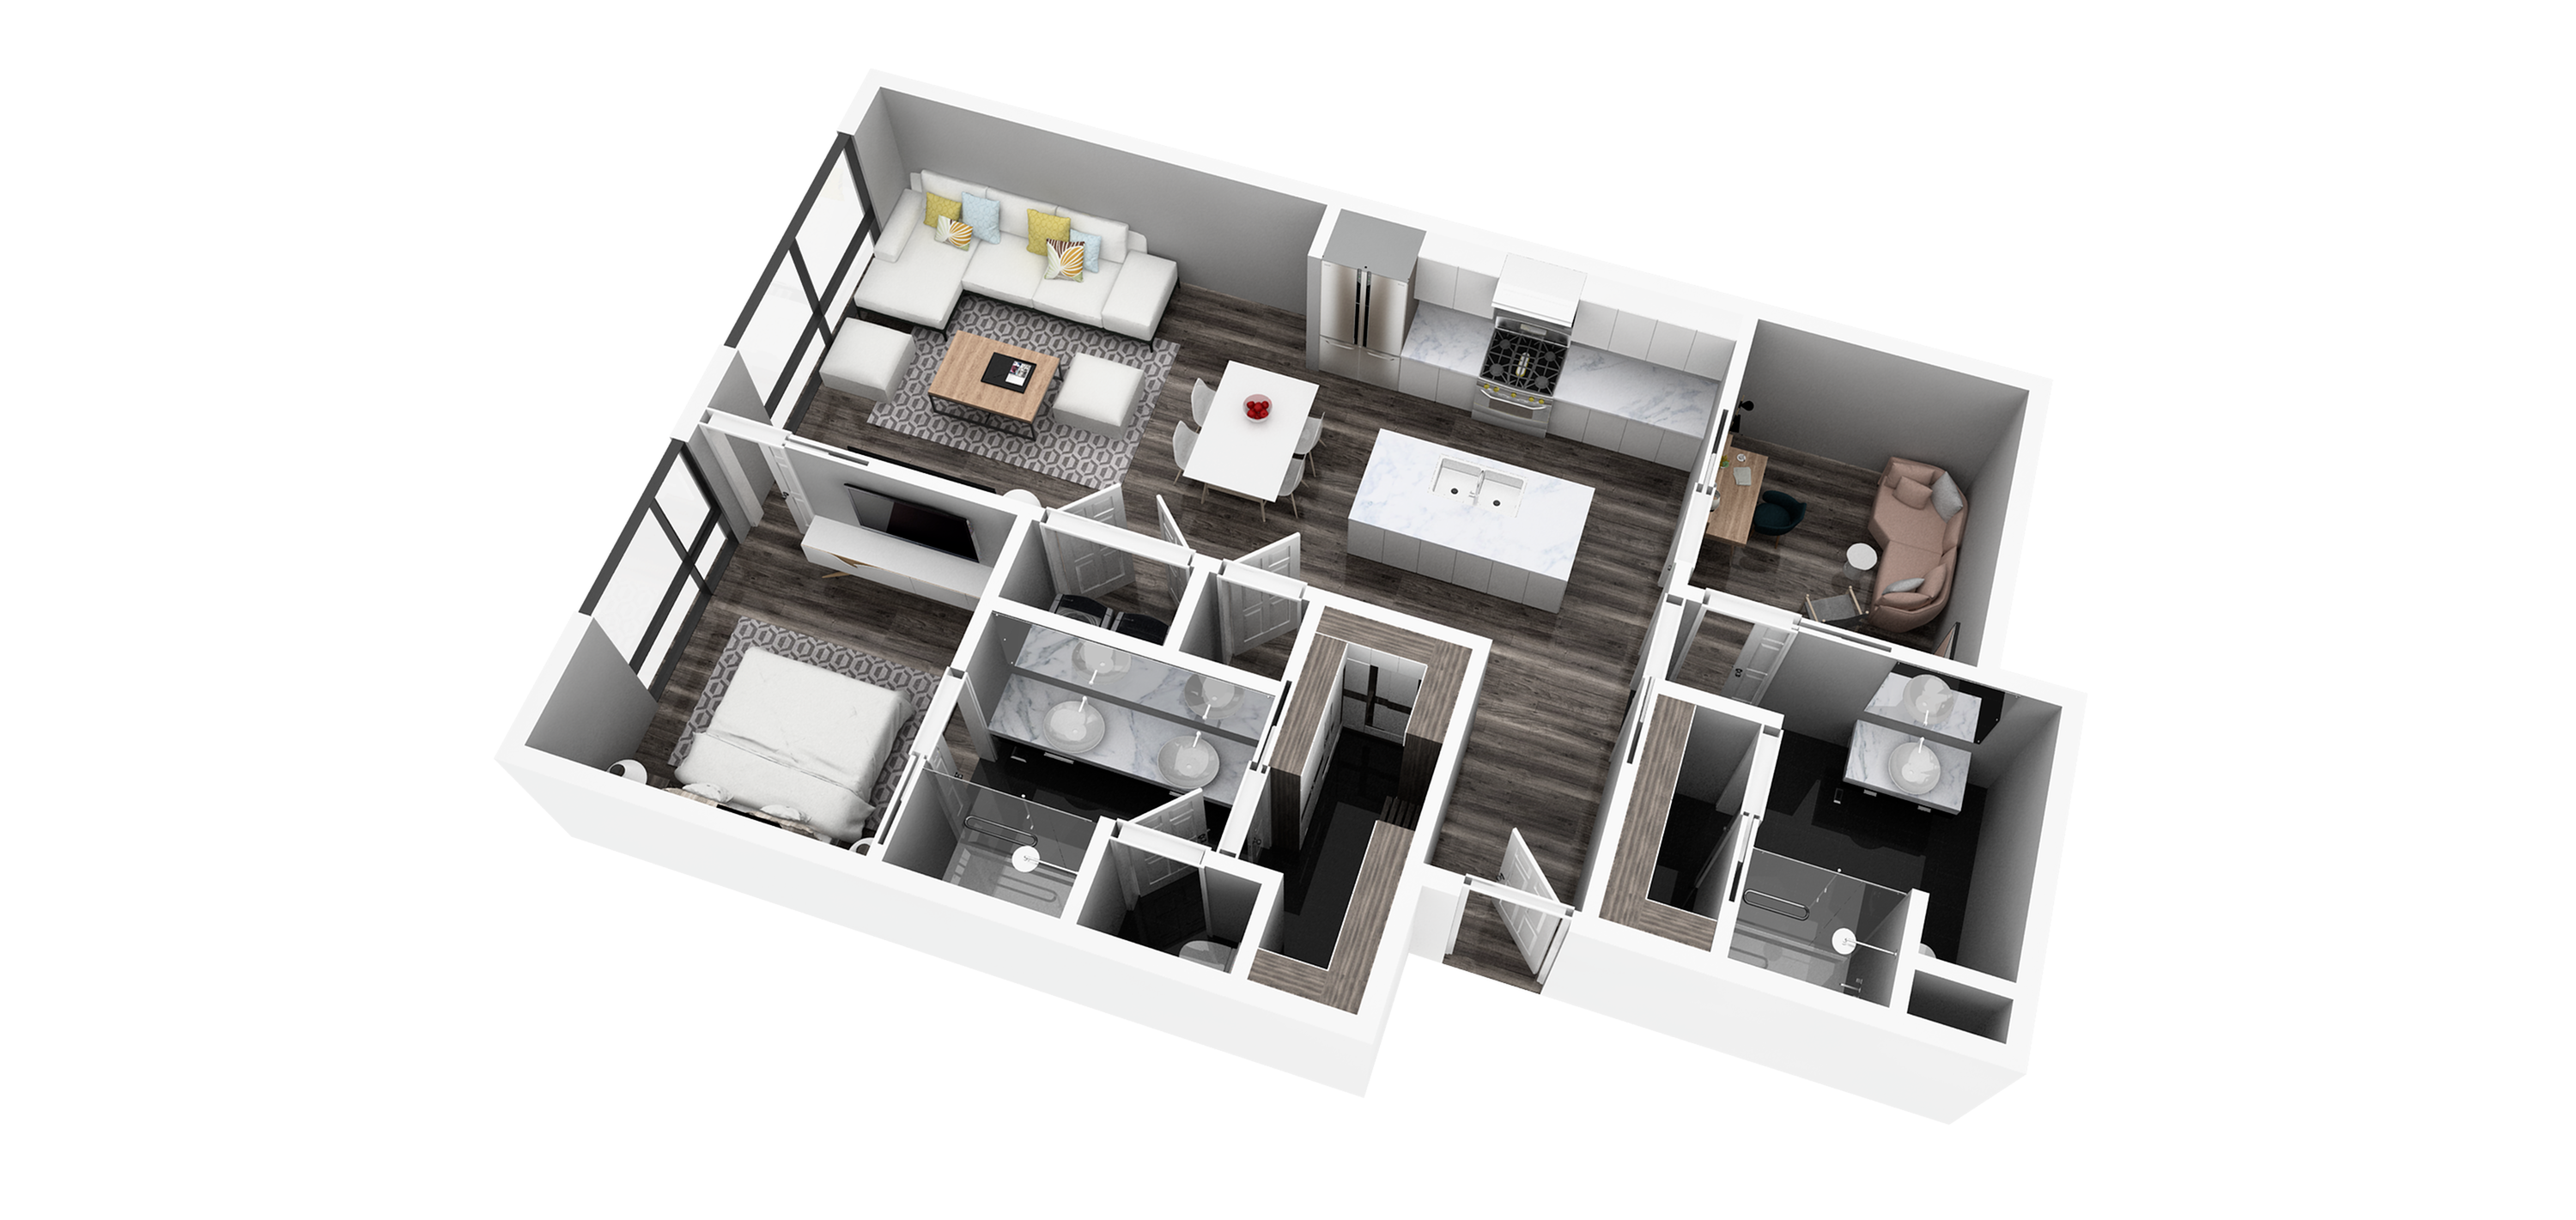 2 bedroom 2 bathroom 3D floorplan